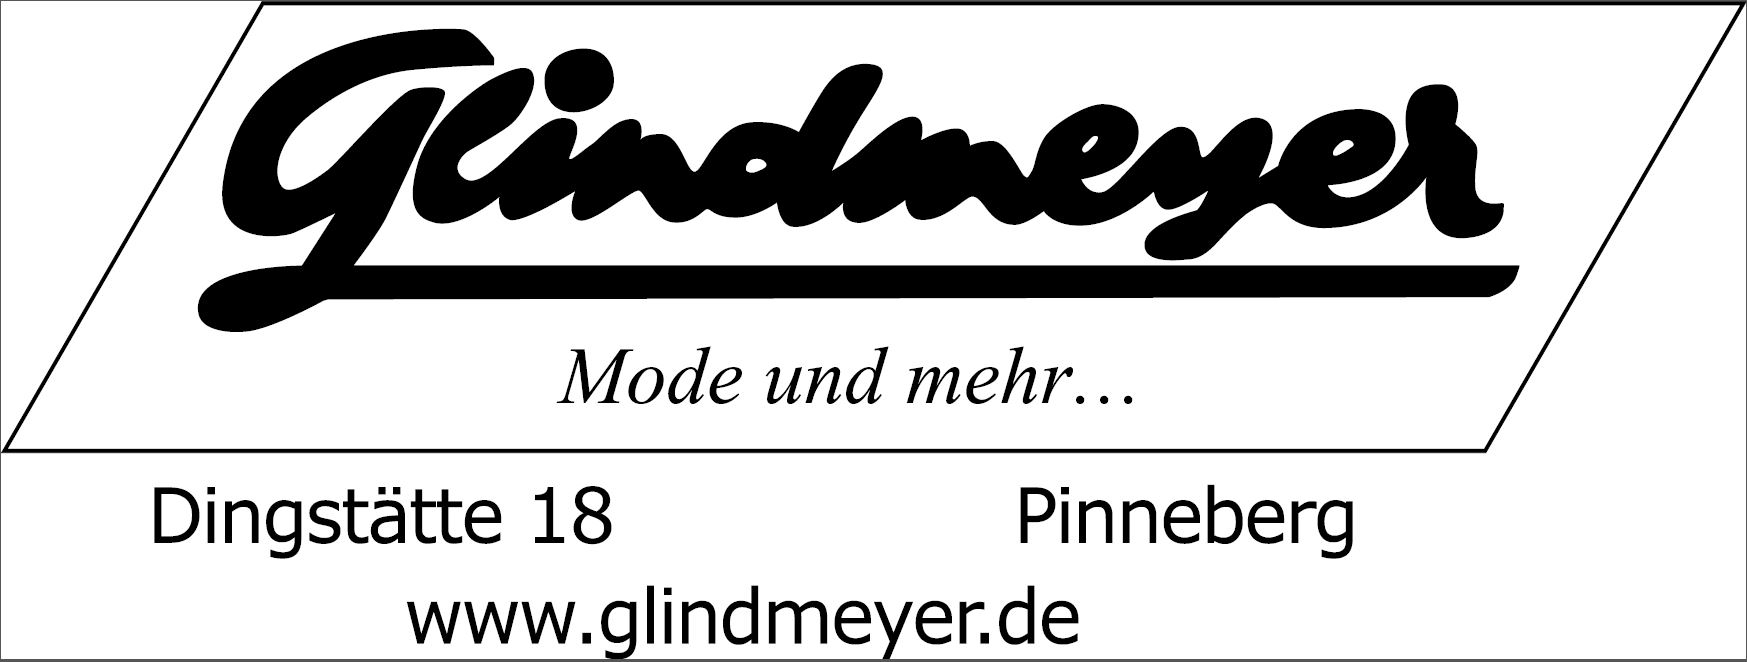 Glindmeyer